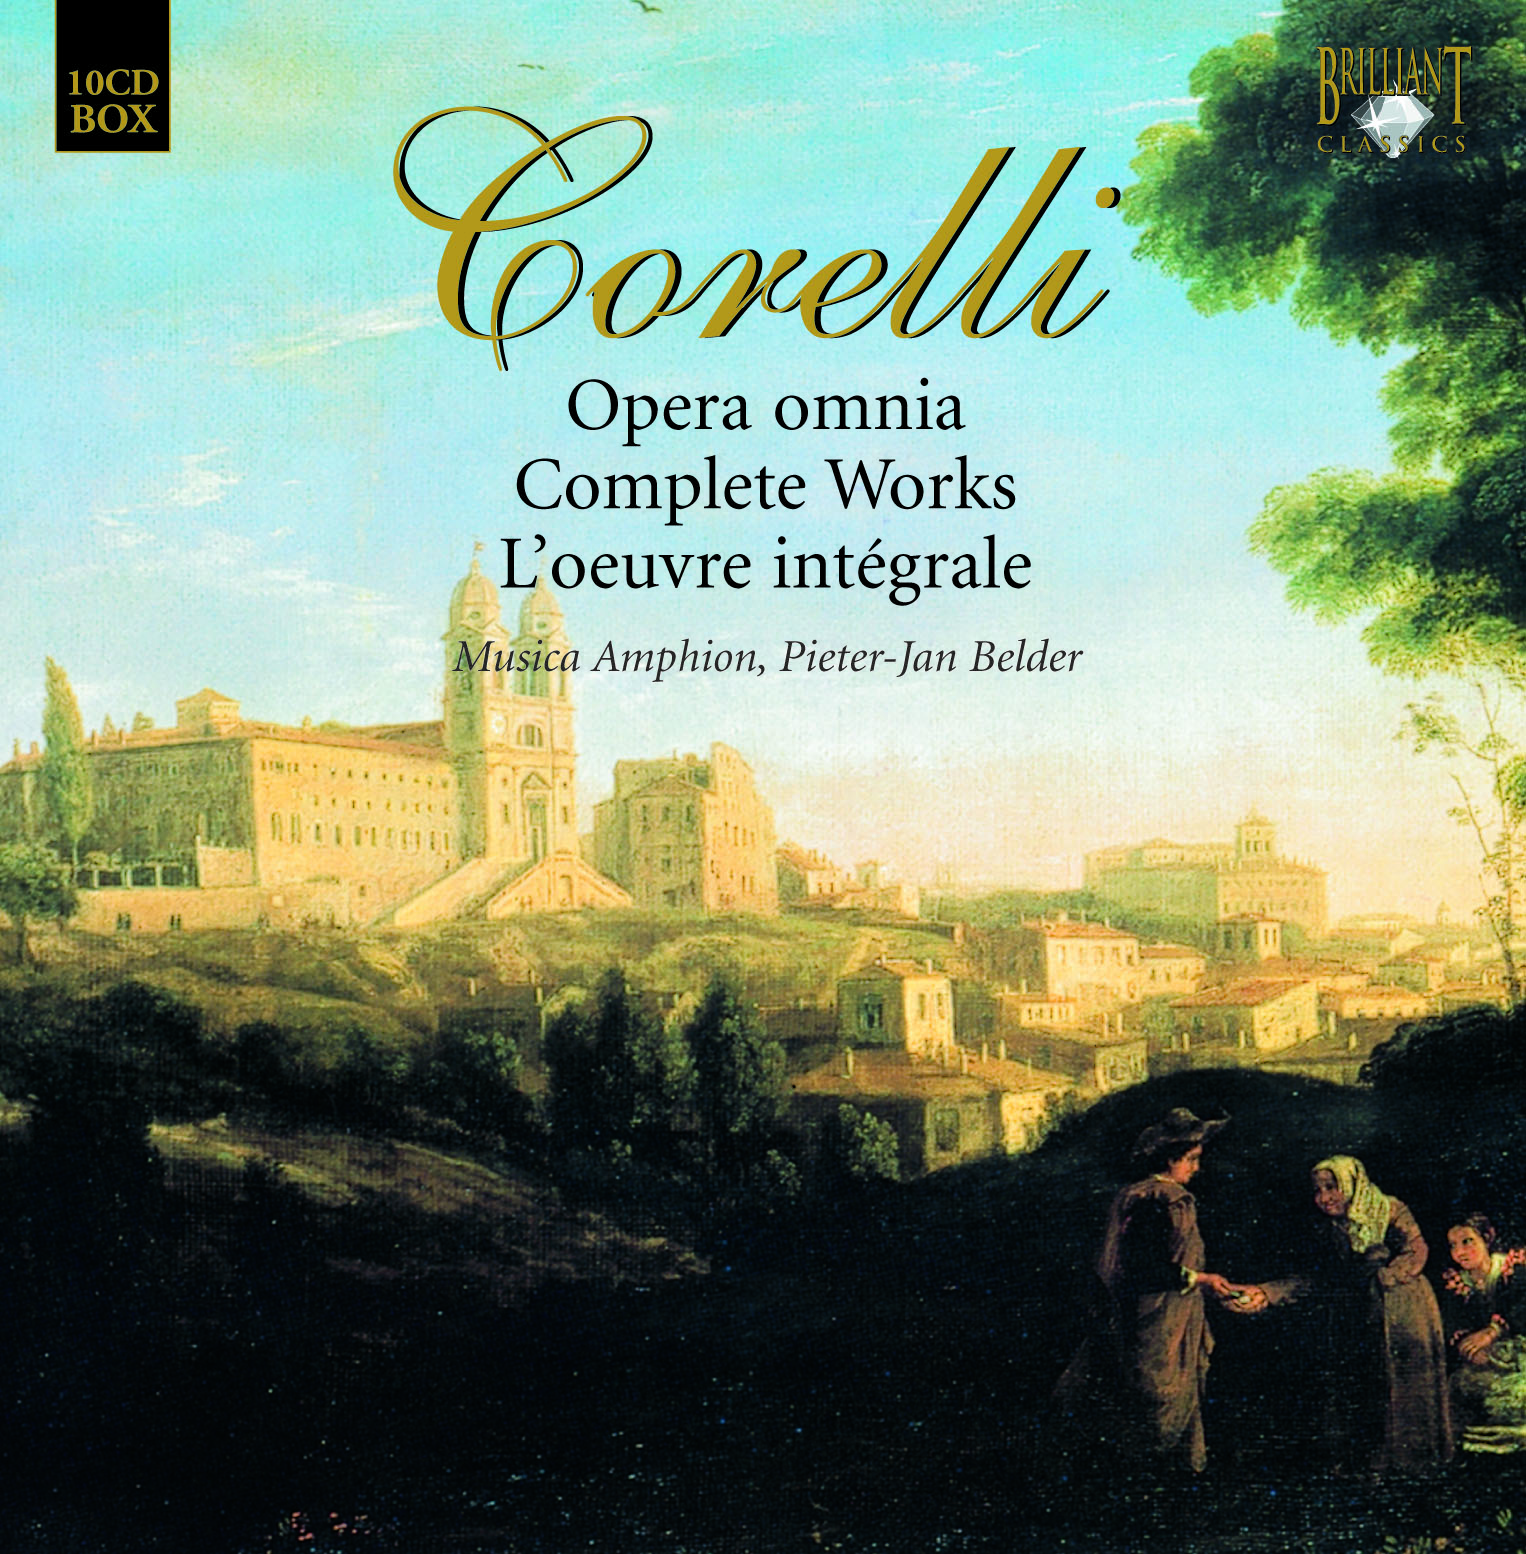 Corelli: Opera Omnia, Complete Works